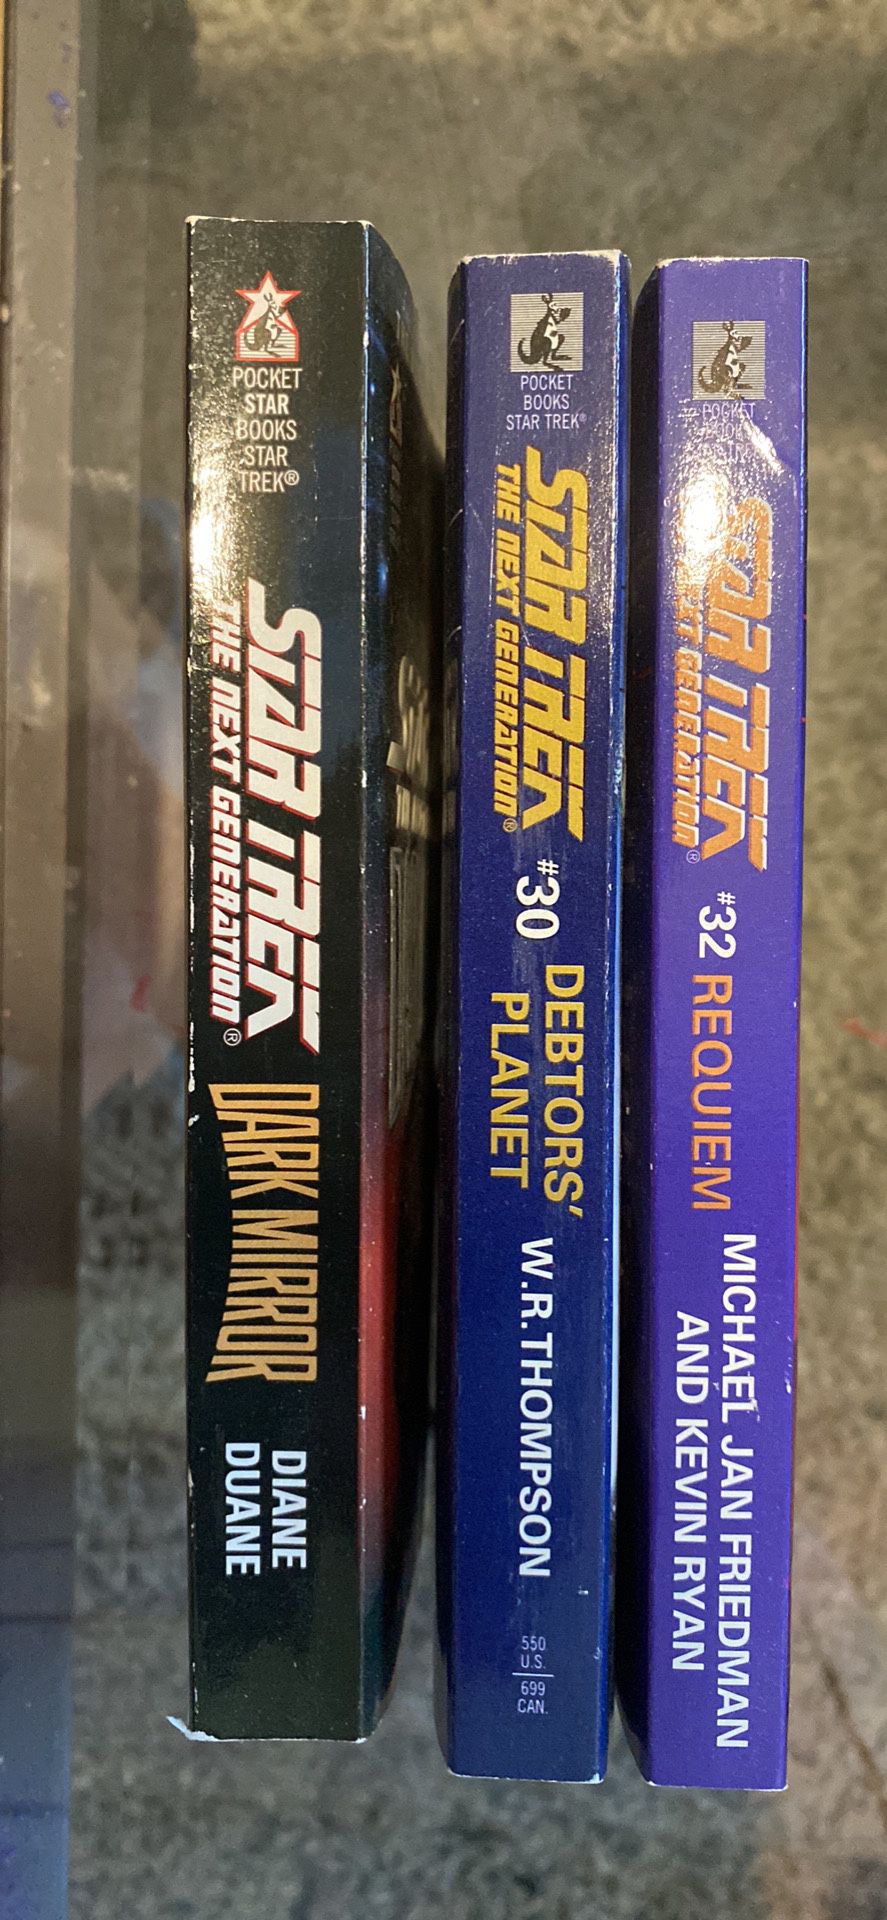 Star Trek Next generation Books